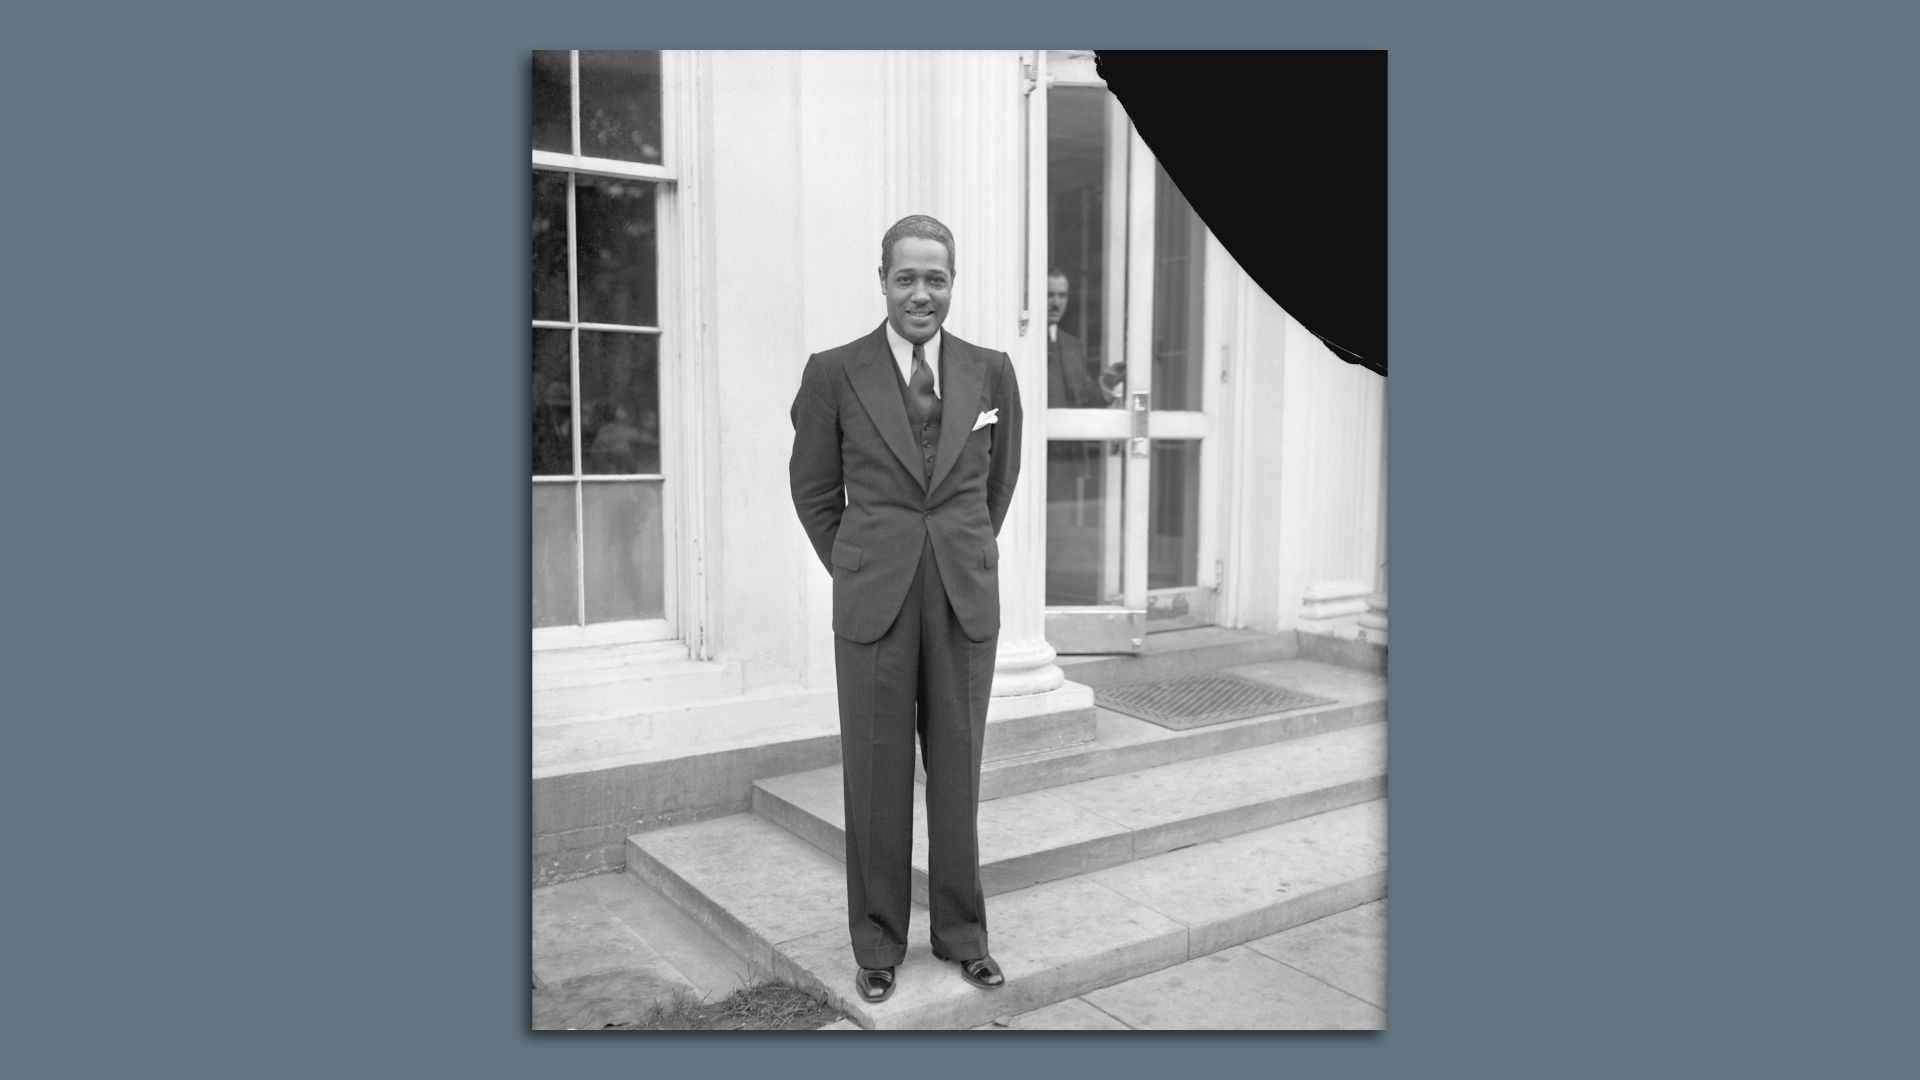 A picture of Duke Ellington posing outside the White House